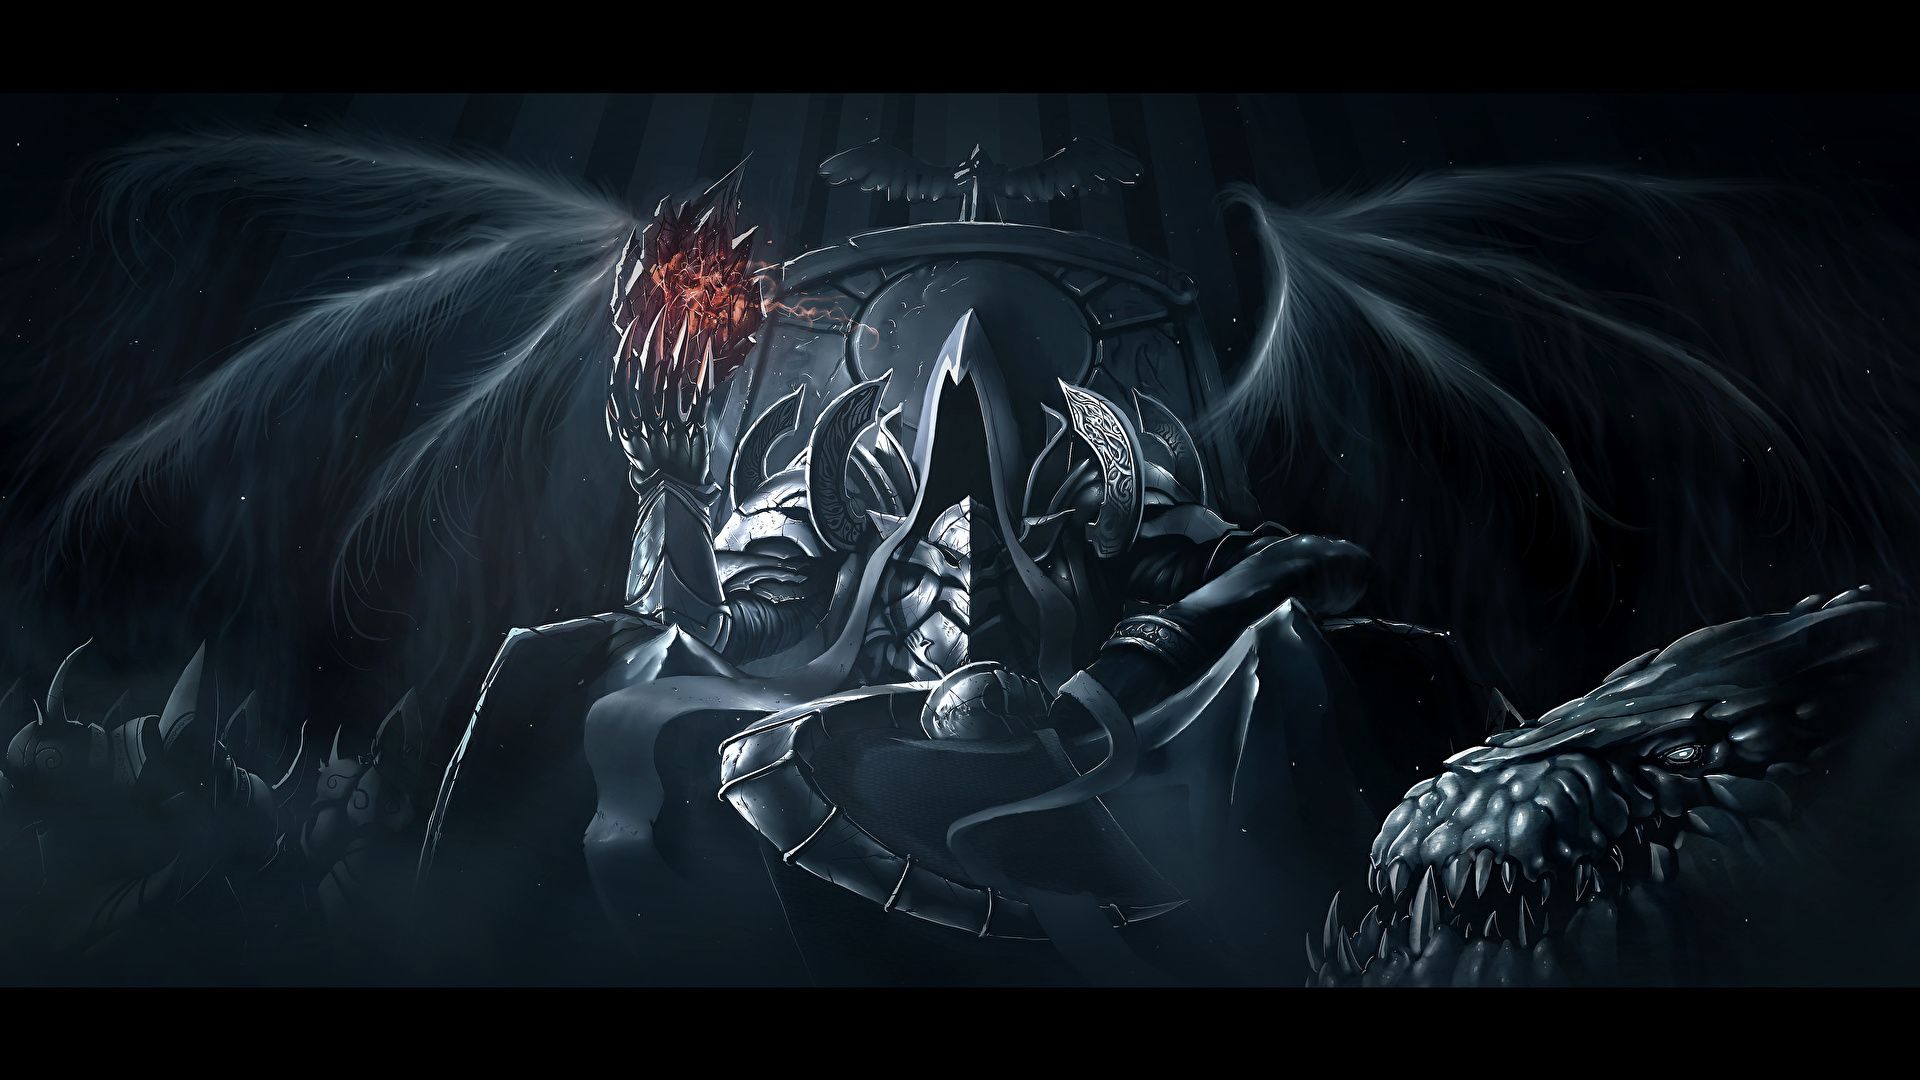  Diablo 3 1920x1080 Hintergrundbild 1920x1080. Fotos von Diablo III Dämon Thron Flügel Reaper of Souls, 1920x1080